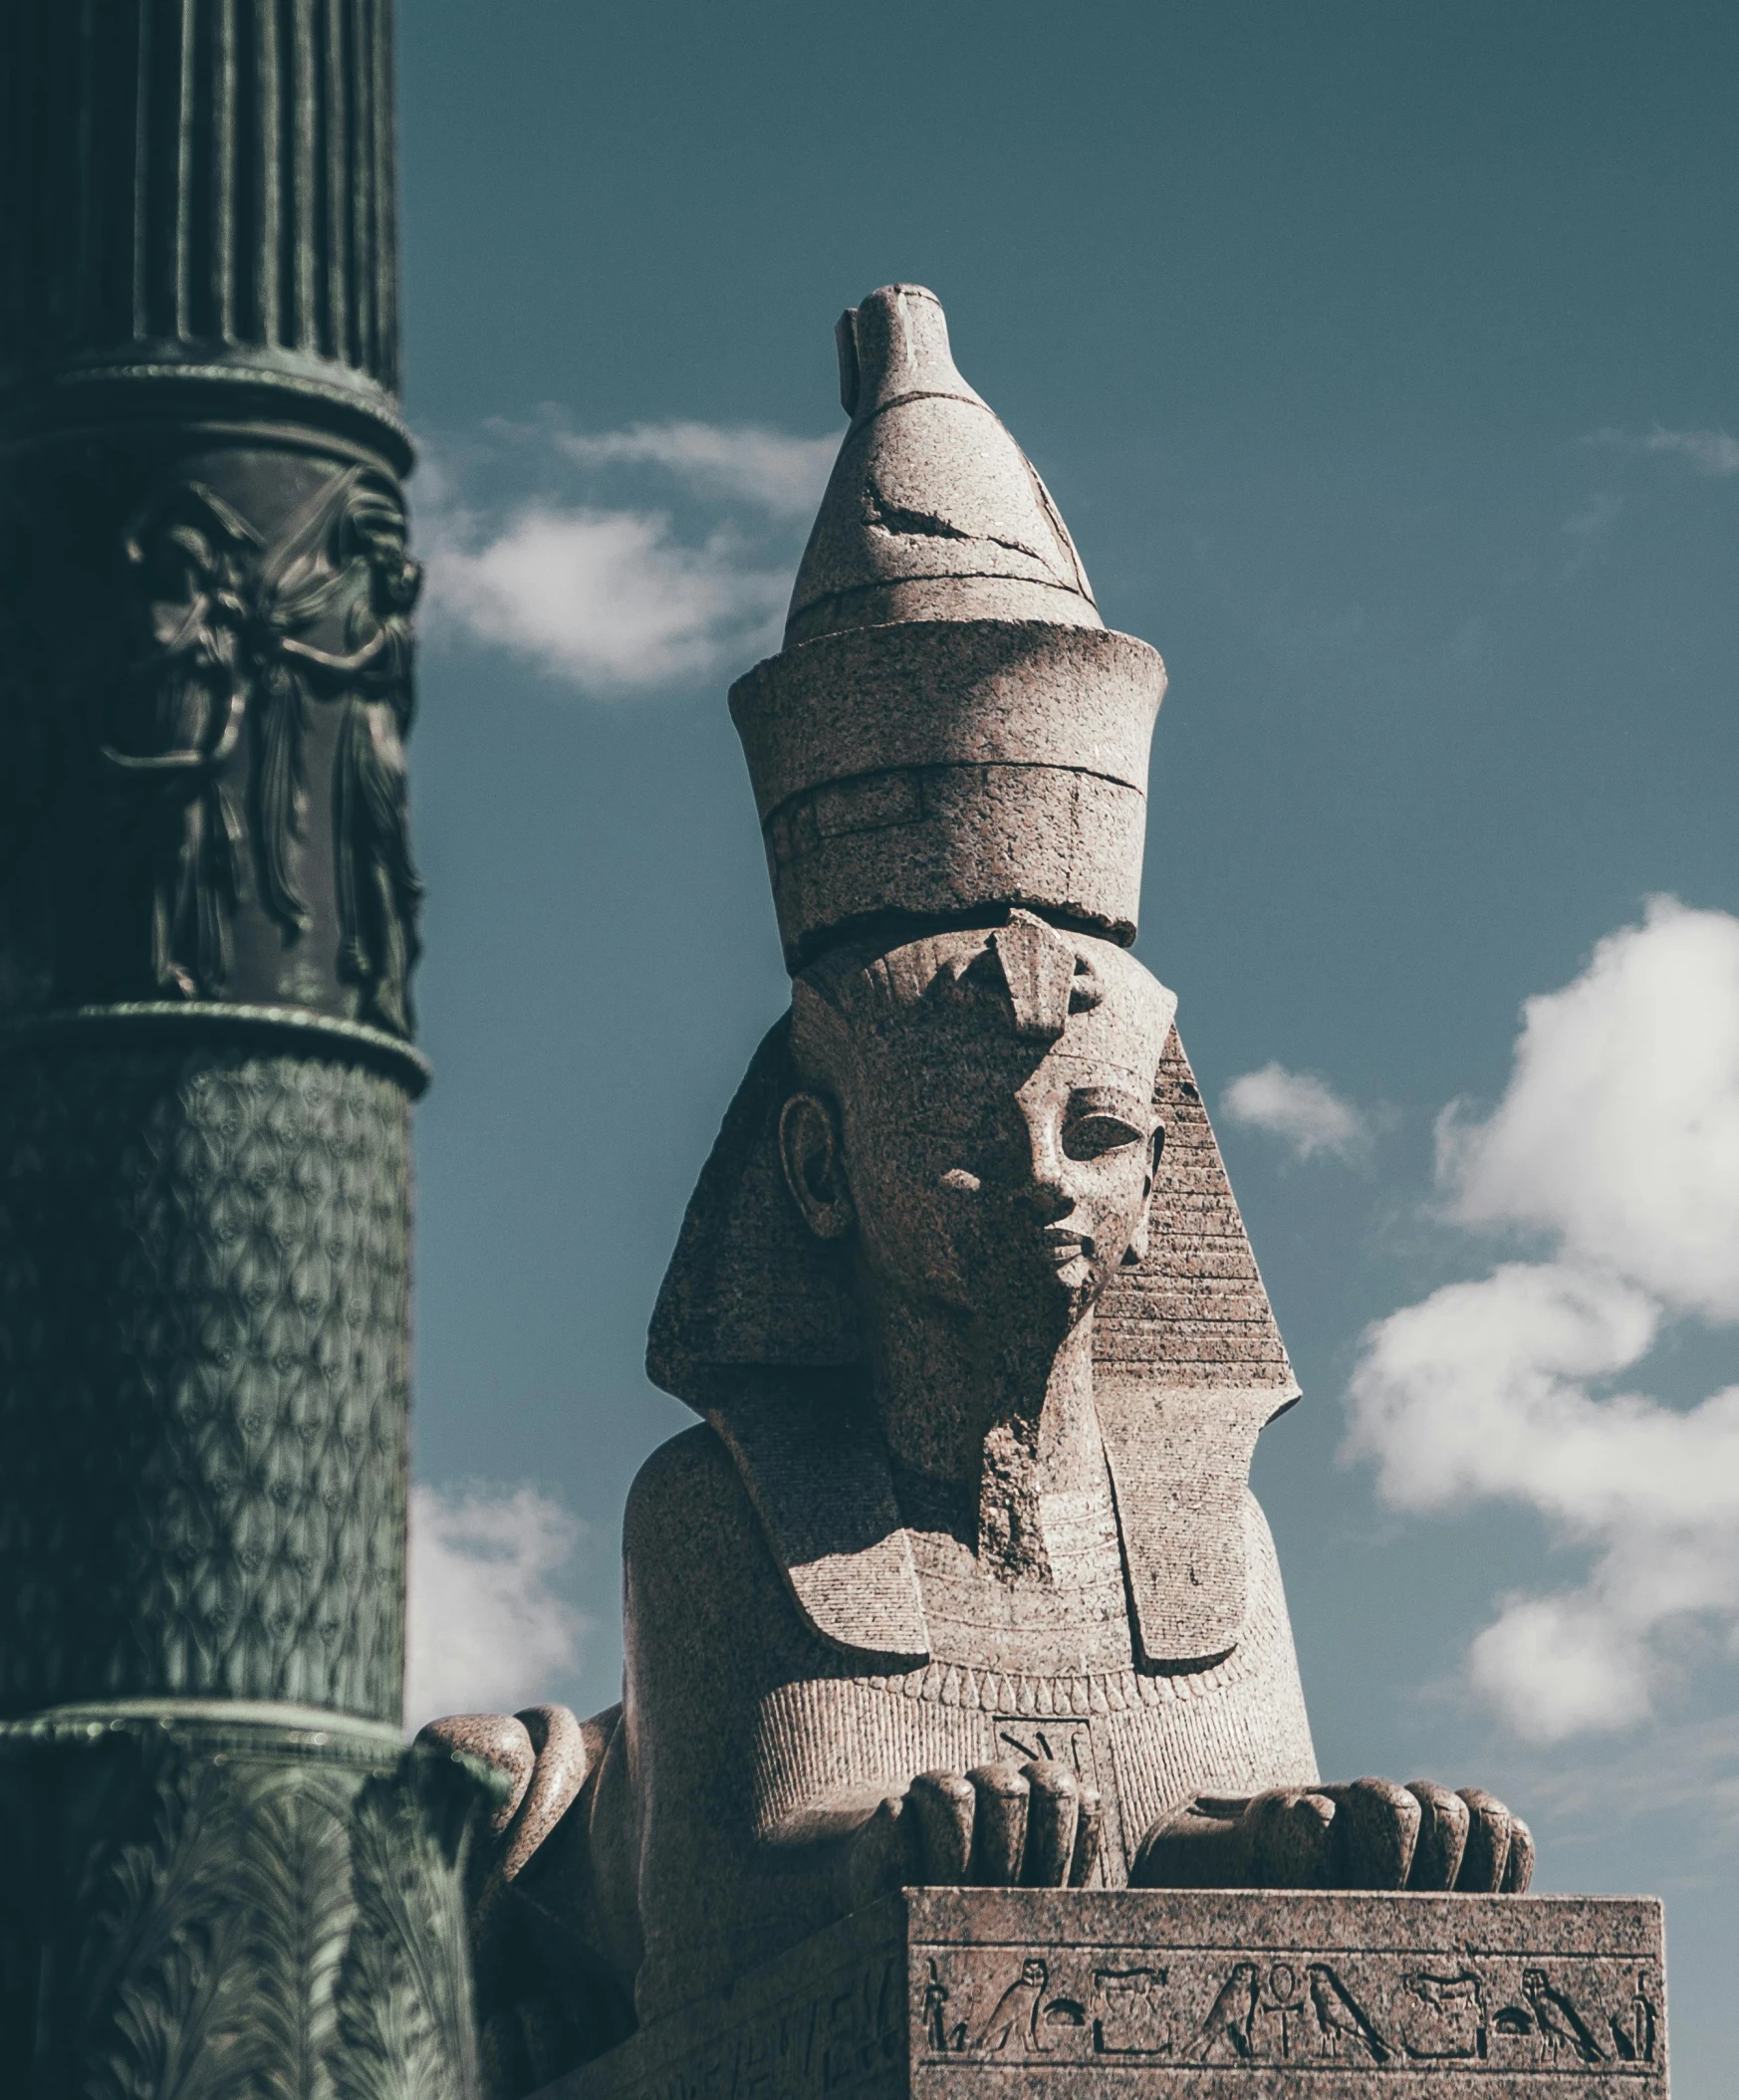 the statue of pharaoh king tutan near an old pillar